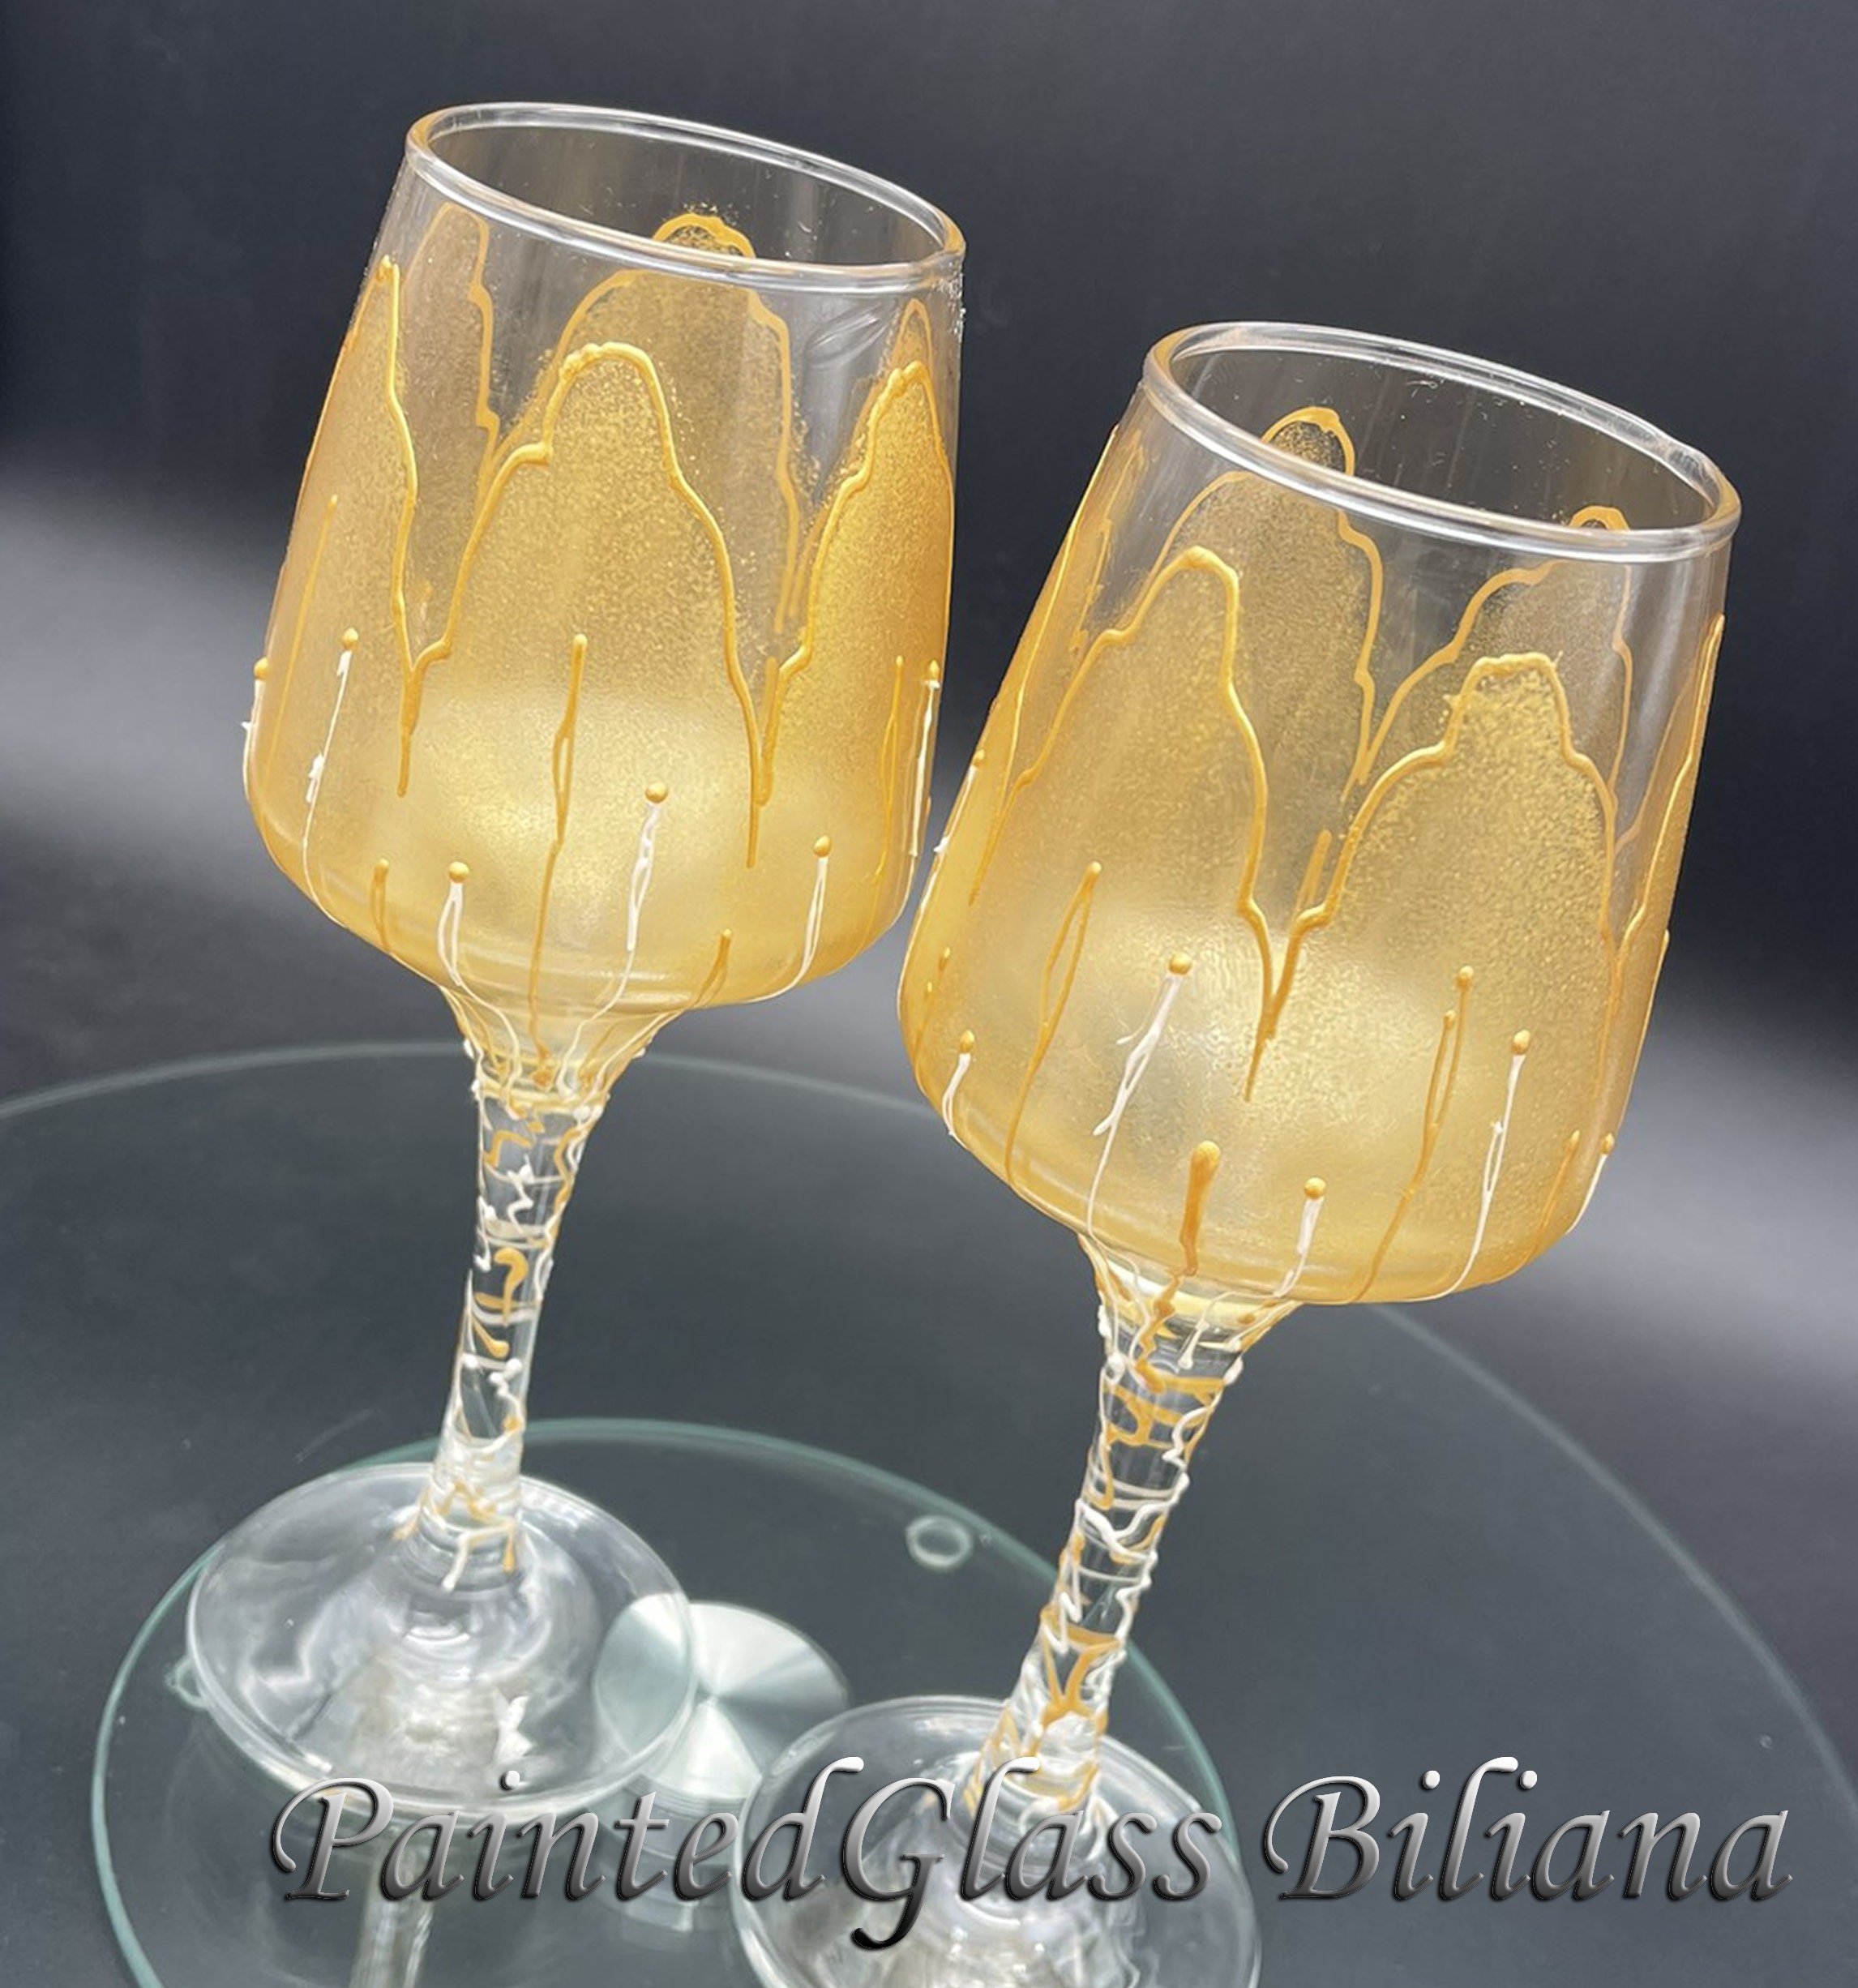 Set of 2 Hand Painted Unique Wine Glasses Golden Tulip 